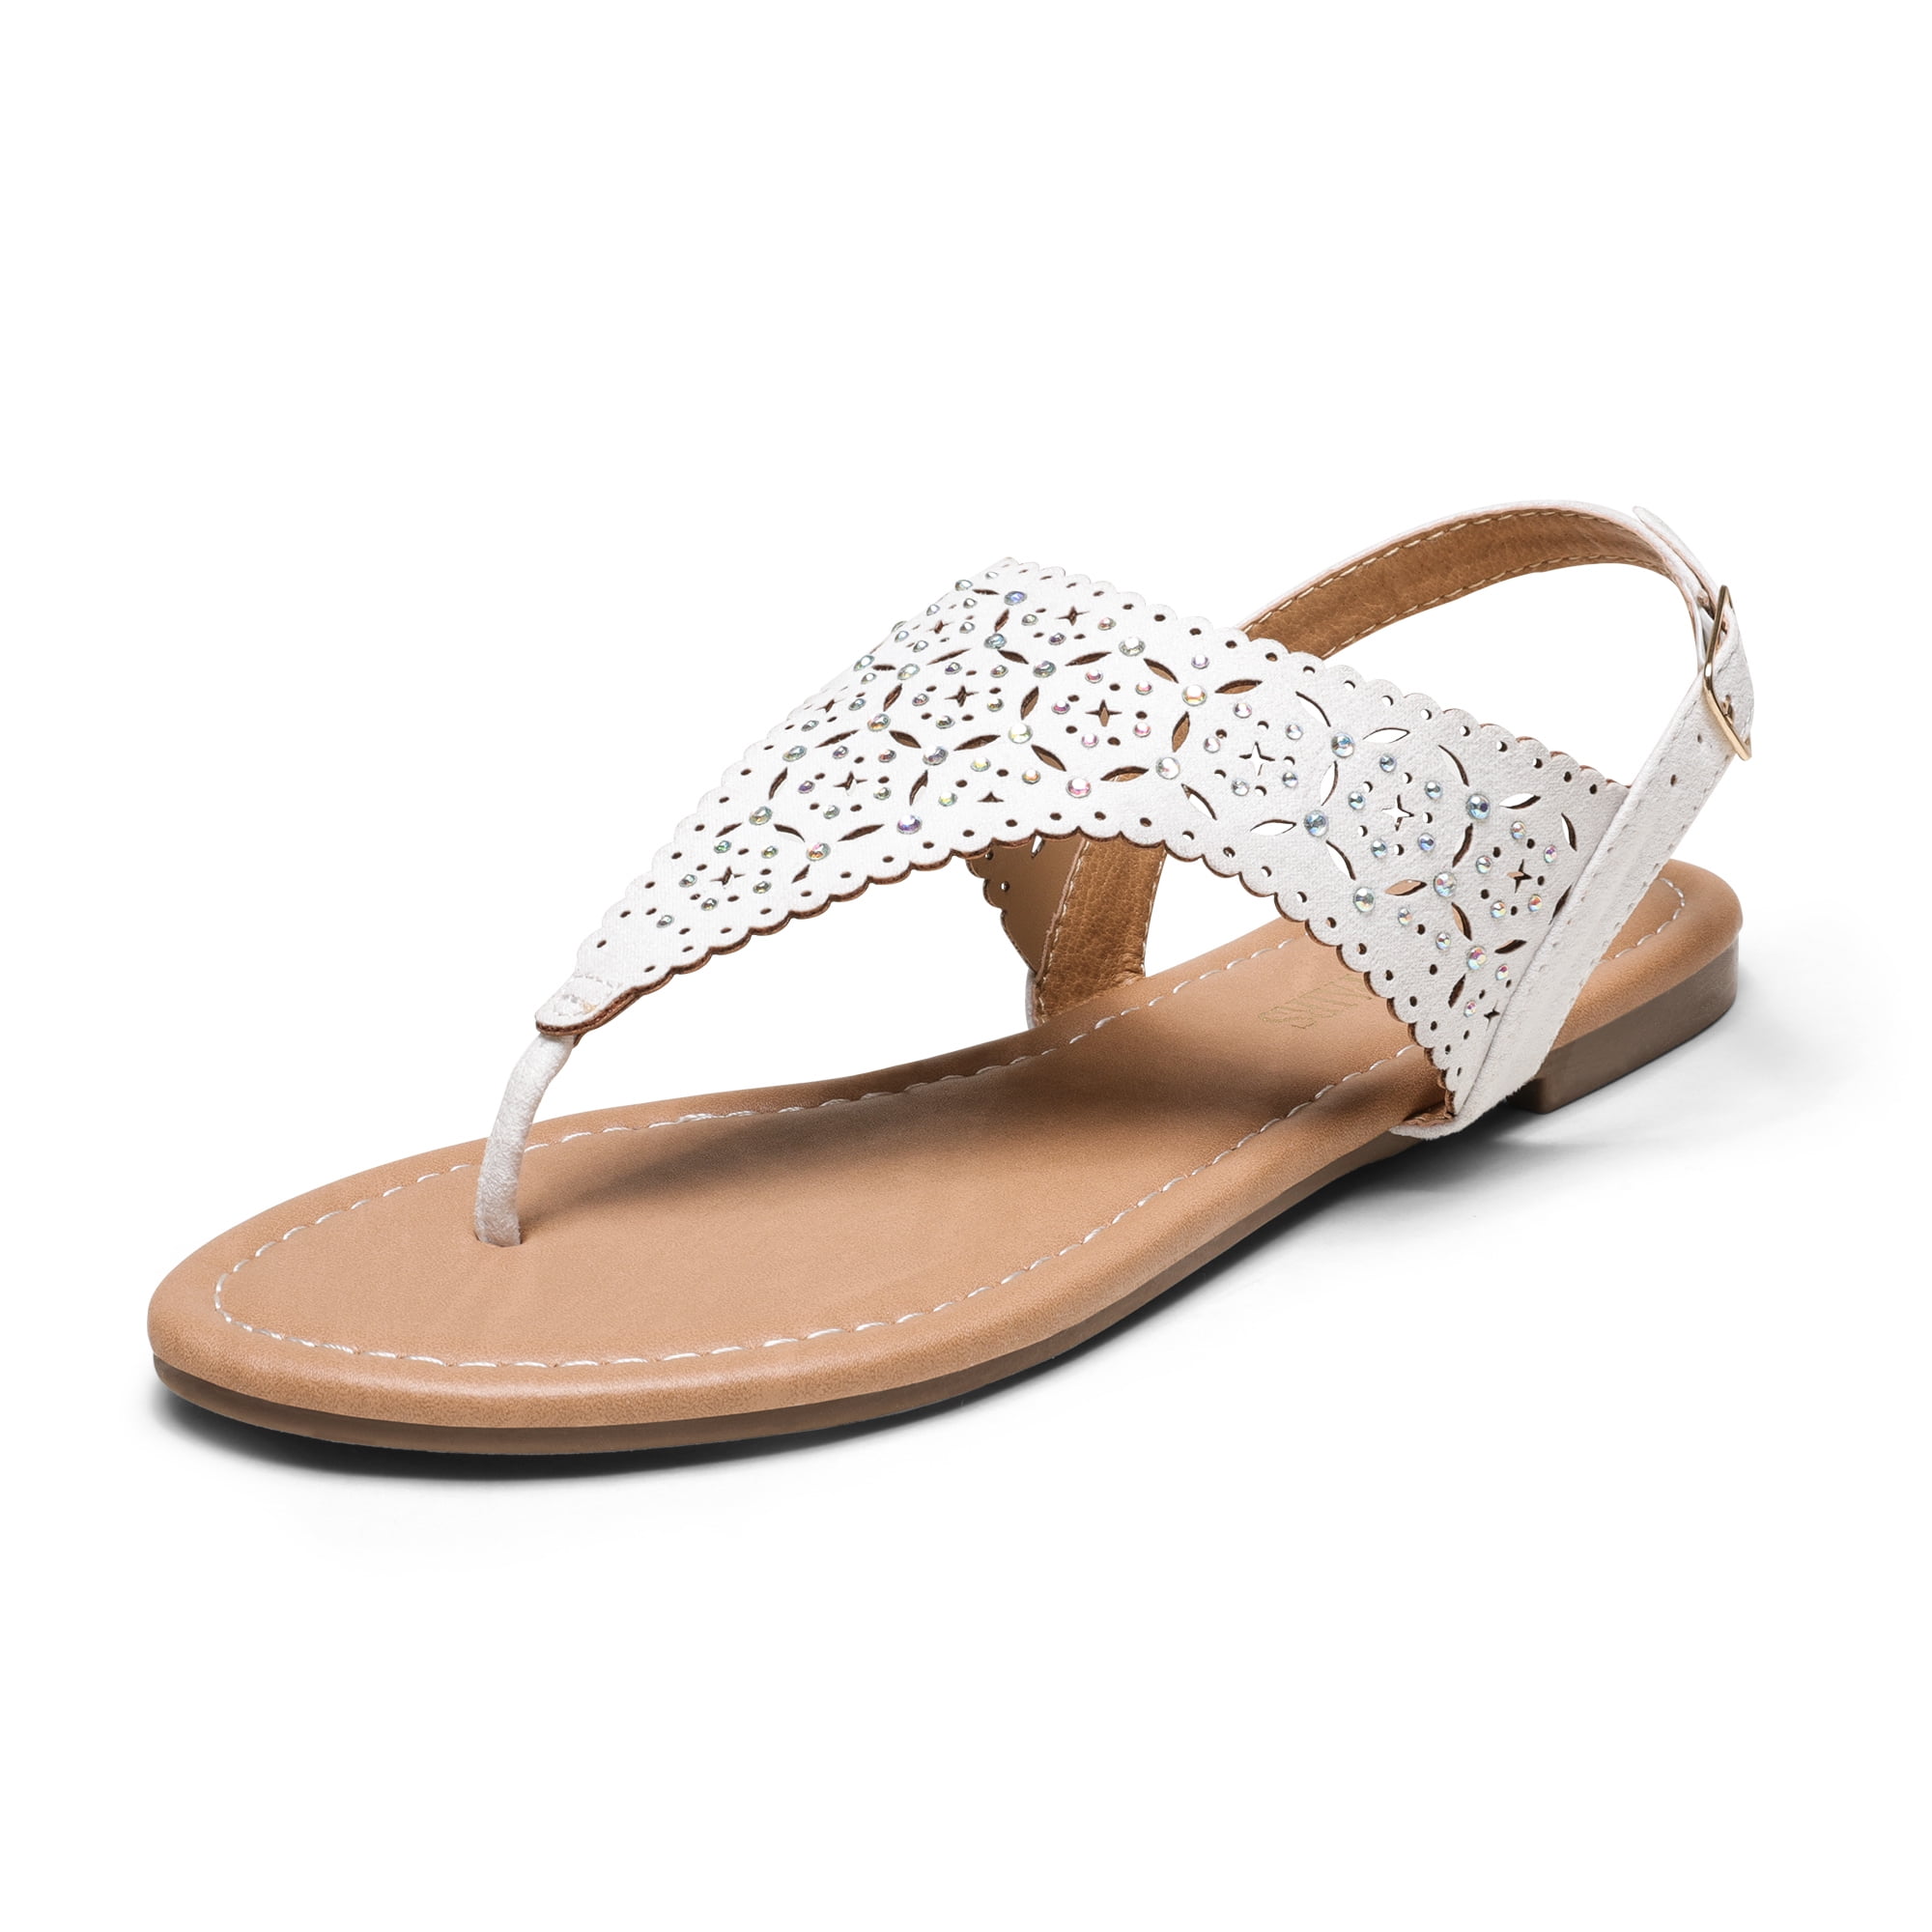 DREAM PAIRS Womens Gladiator Sandals Summer Beach Bold Slingback Flat Sandals